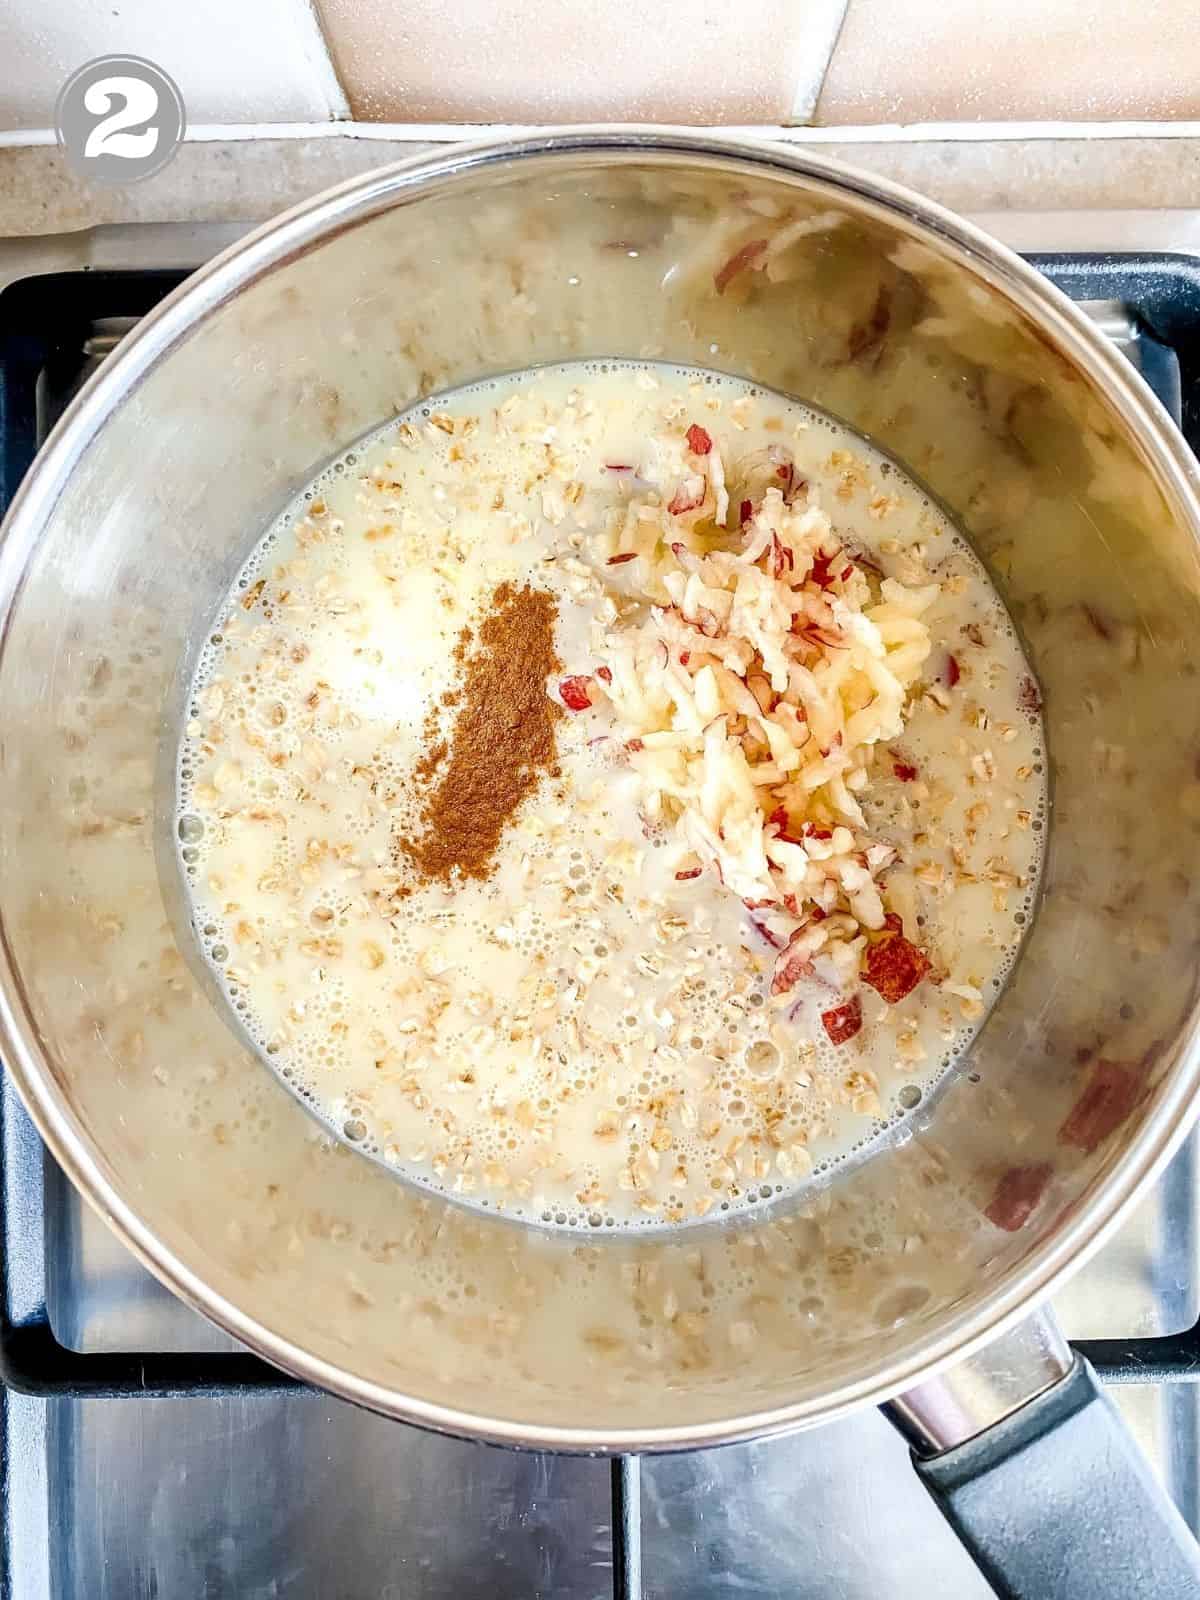 oats, apple and cinnamon in a saucepan.